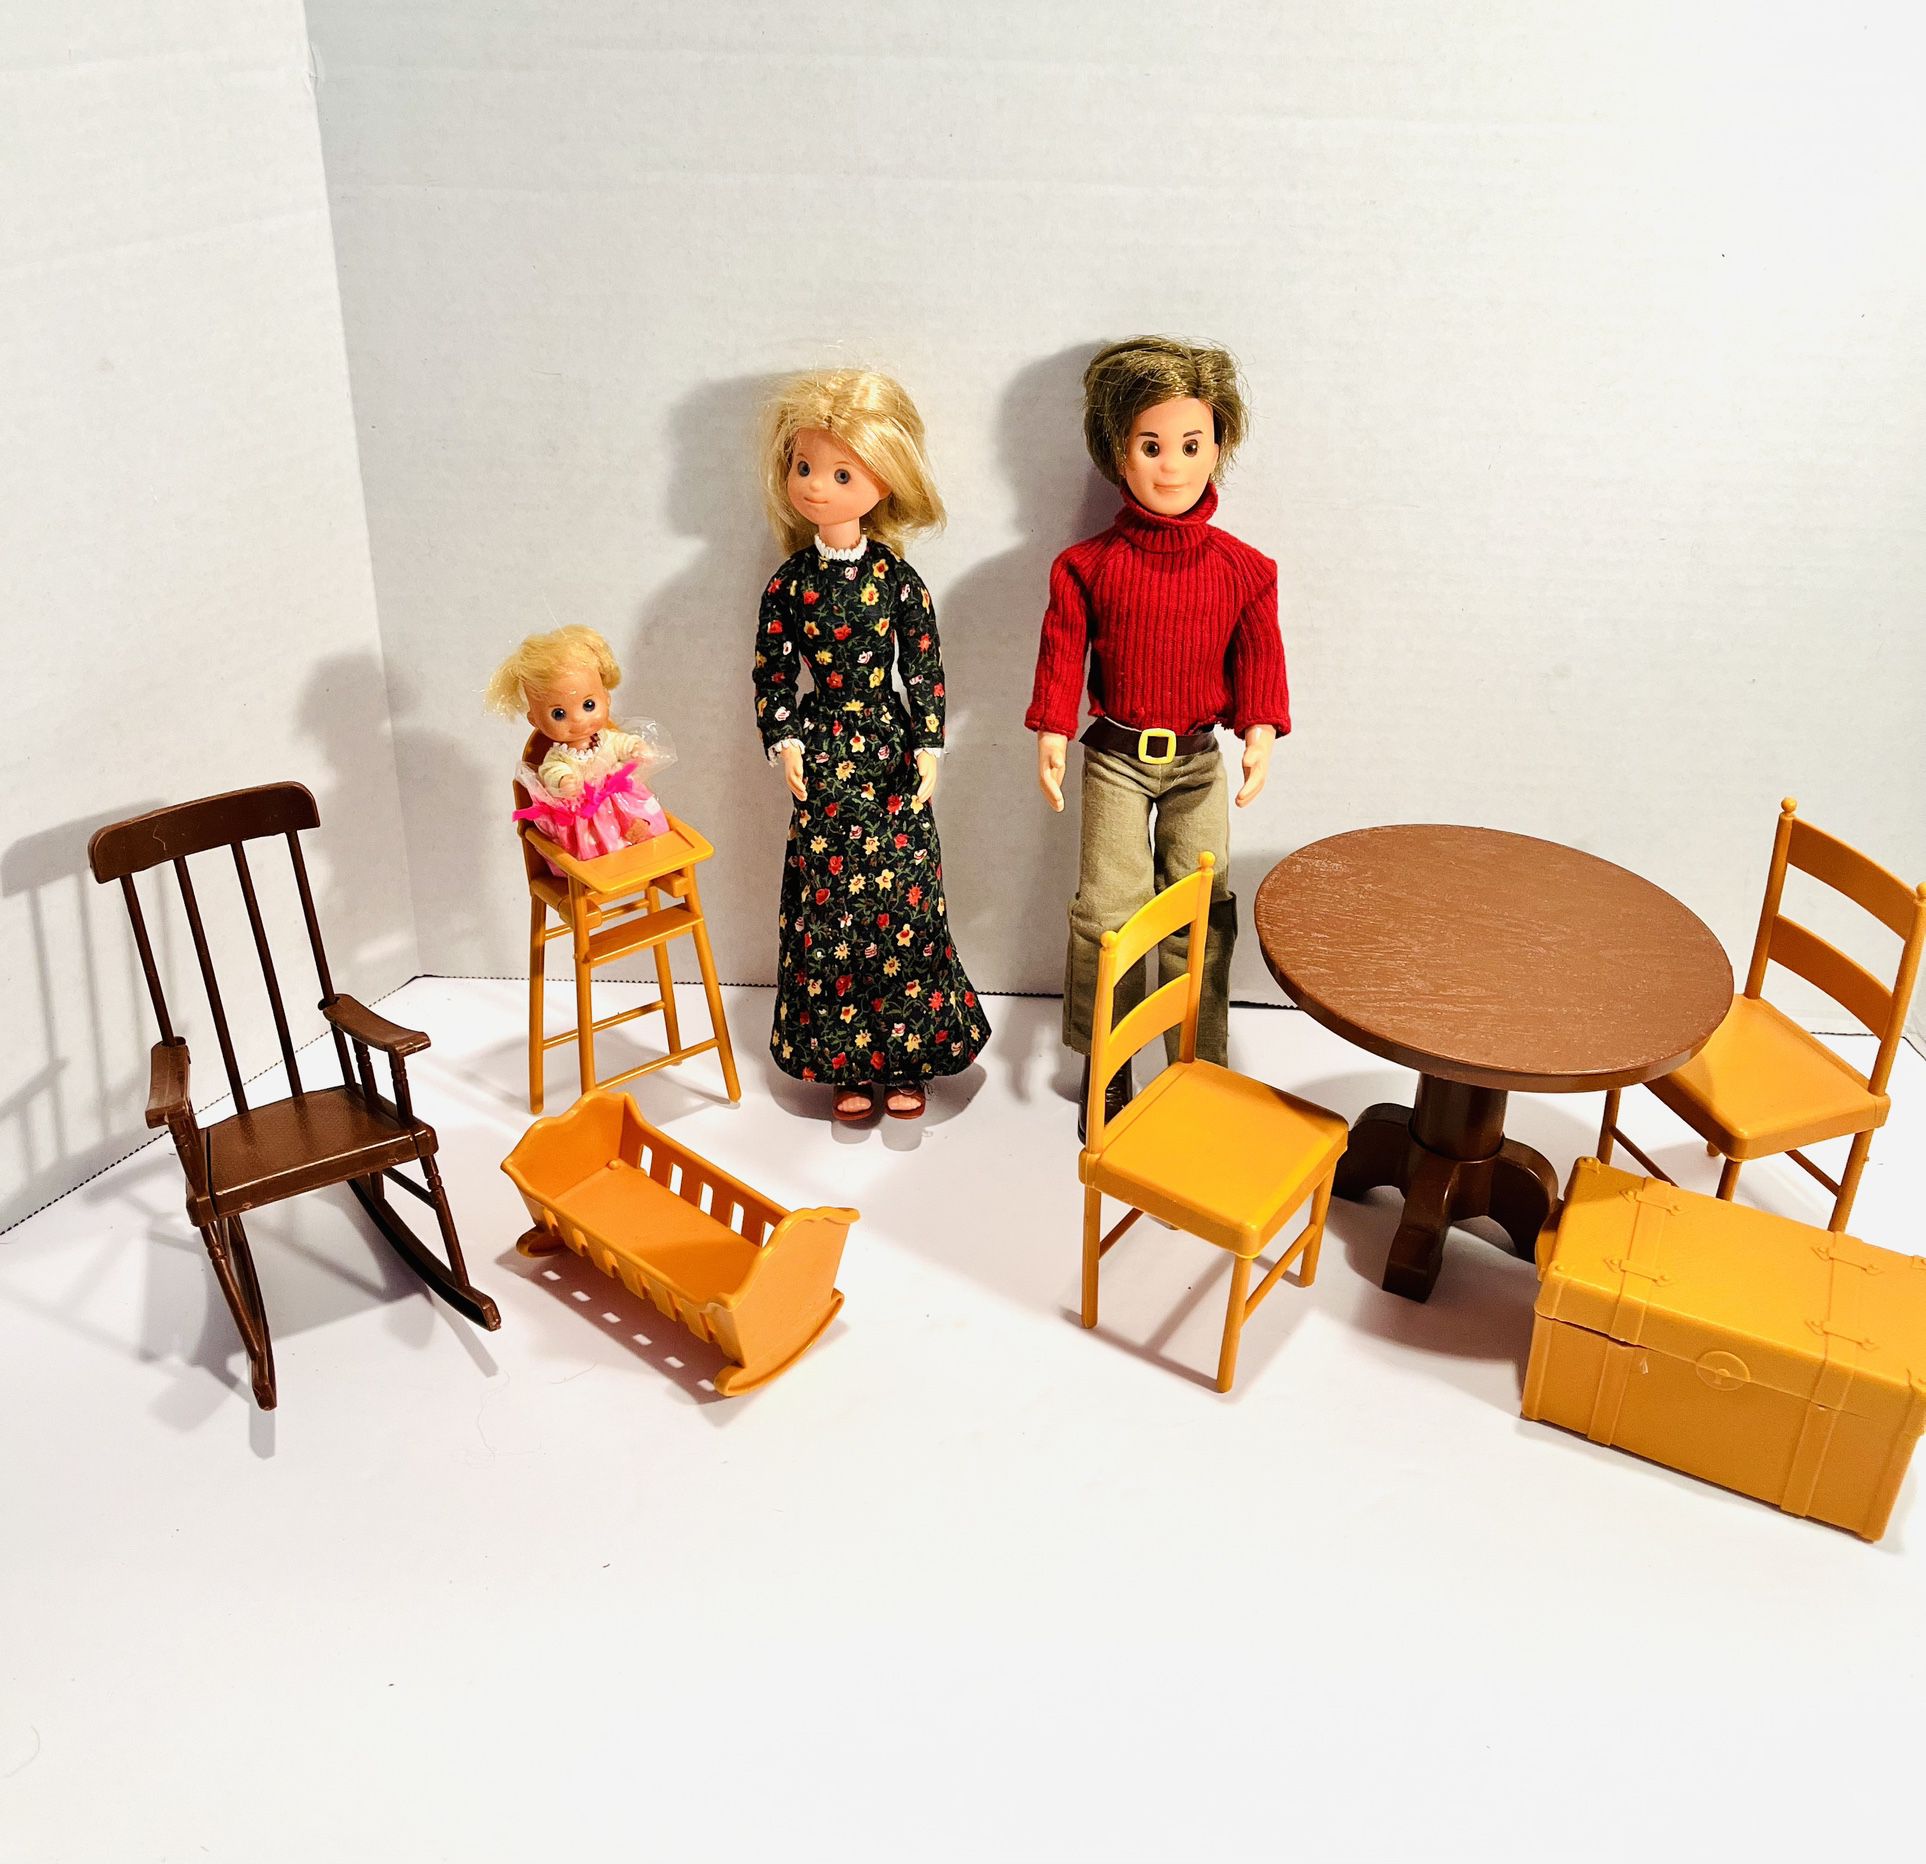 Vintage 1970s Sunshine Family Dolls and Furniture Lot!